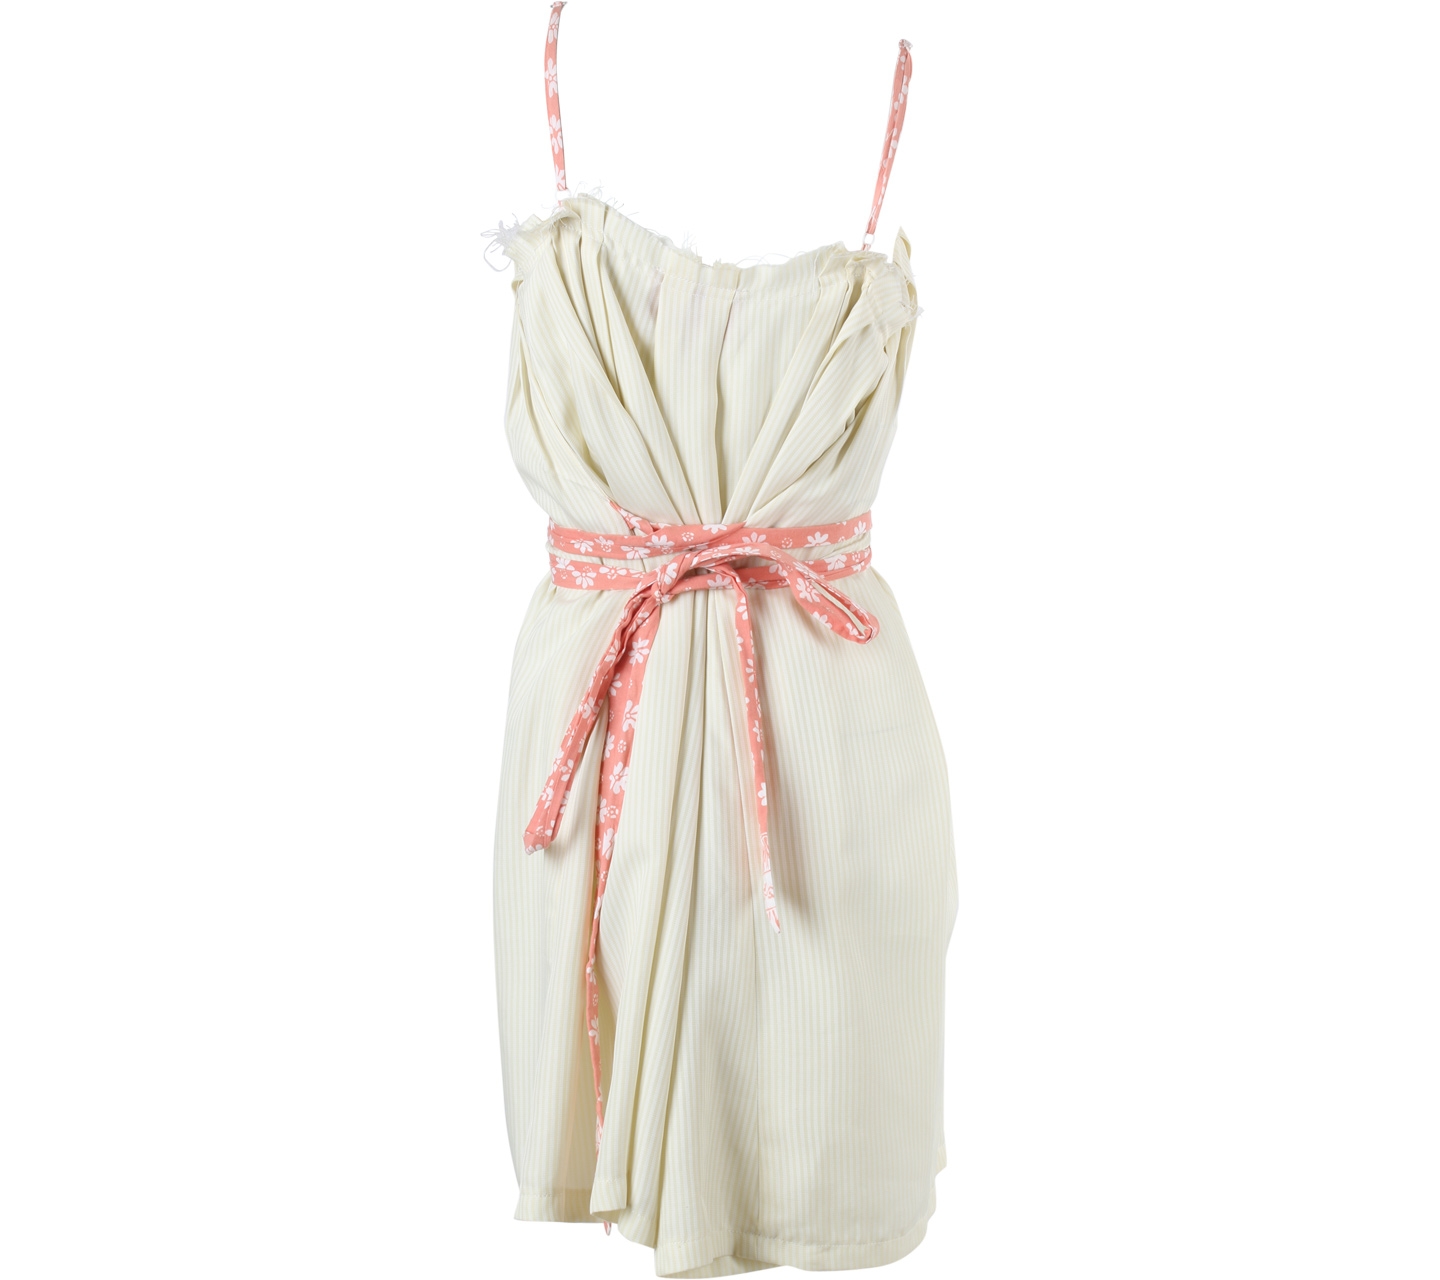 Geulis Cream And White Sleeveless Mini Dress